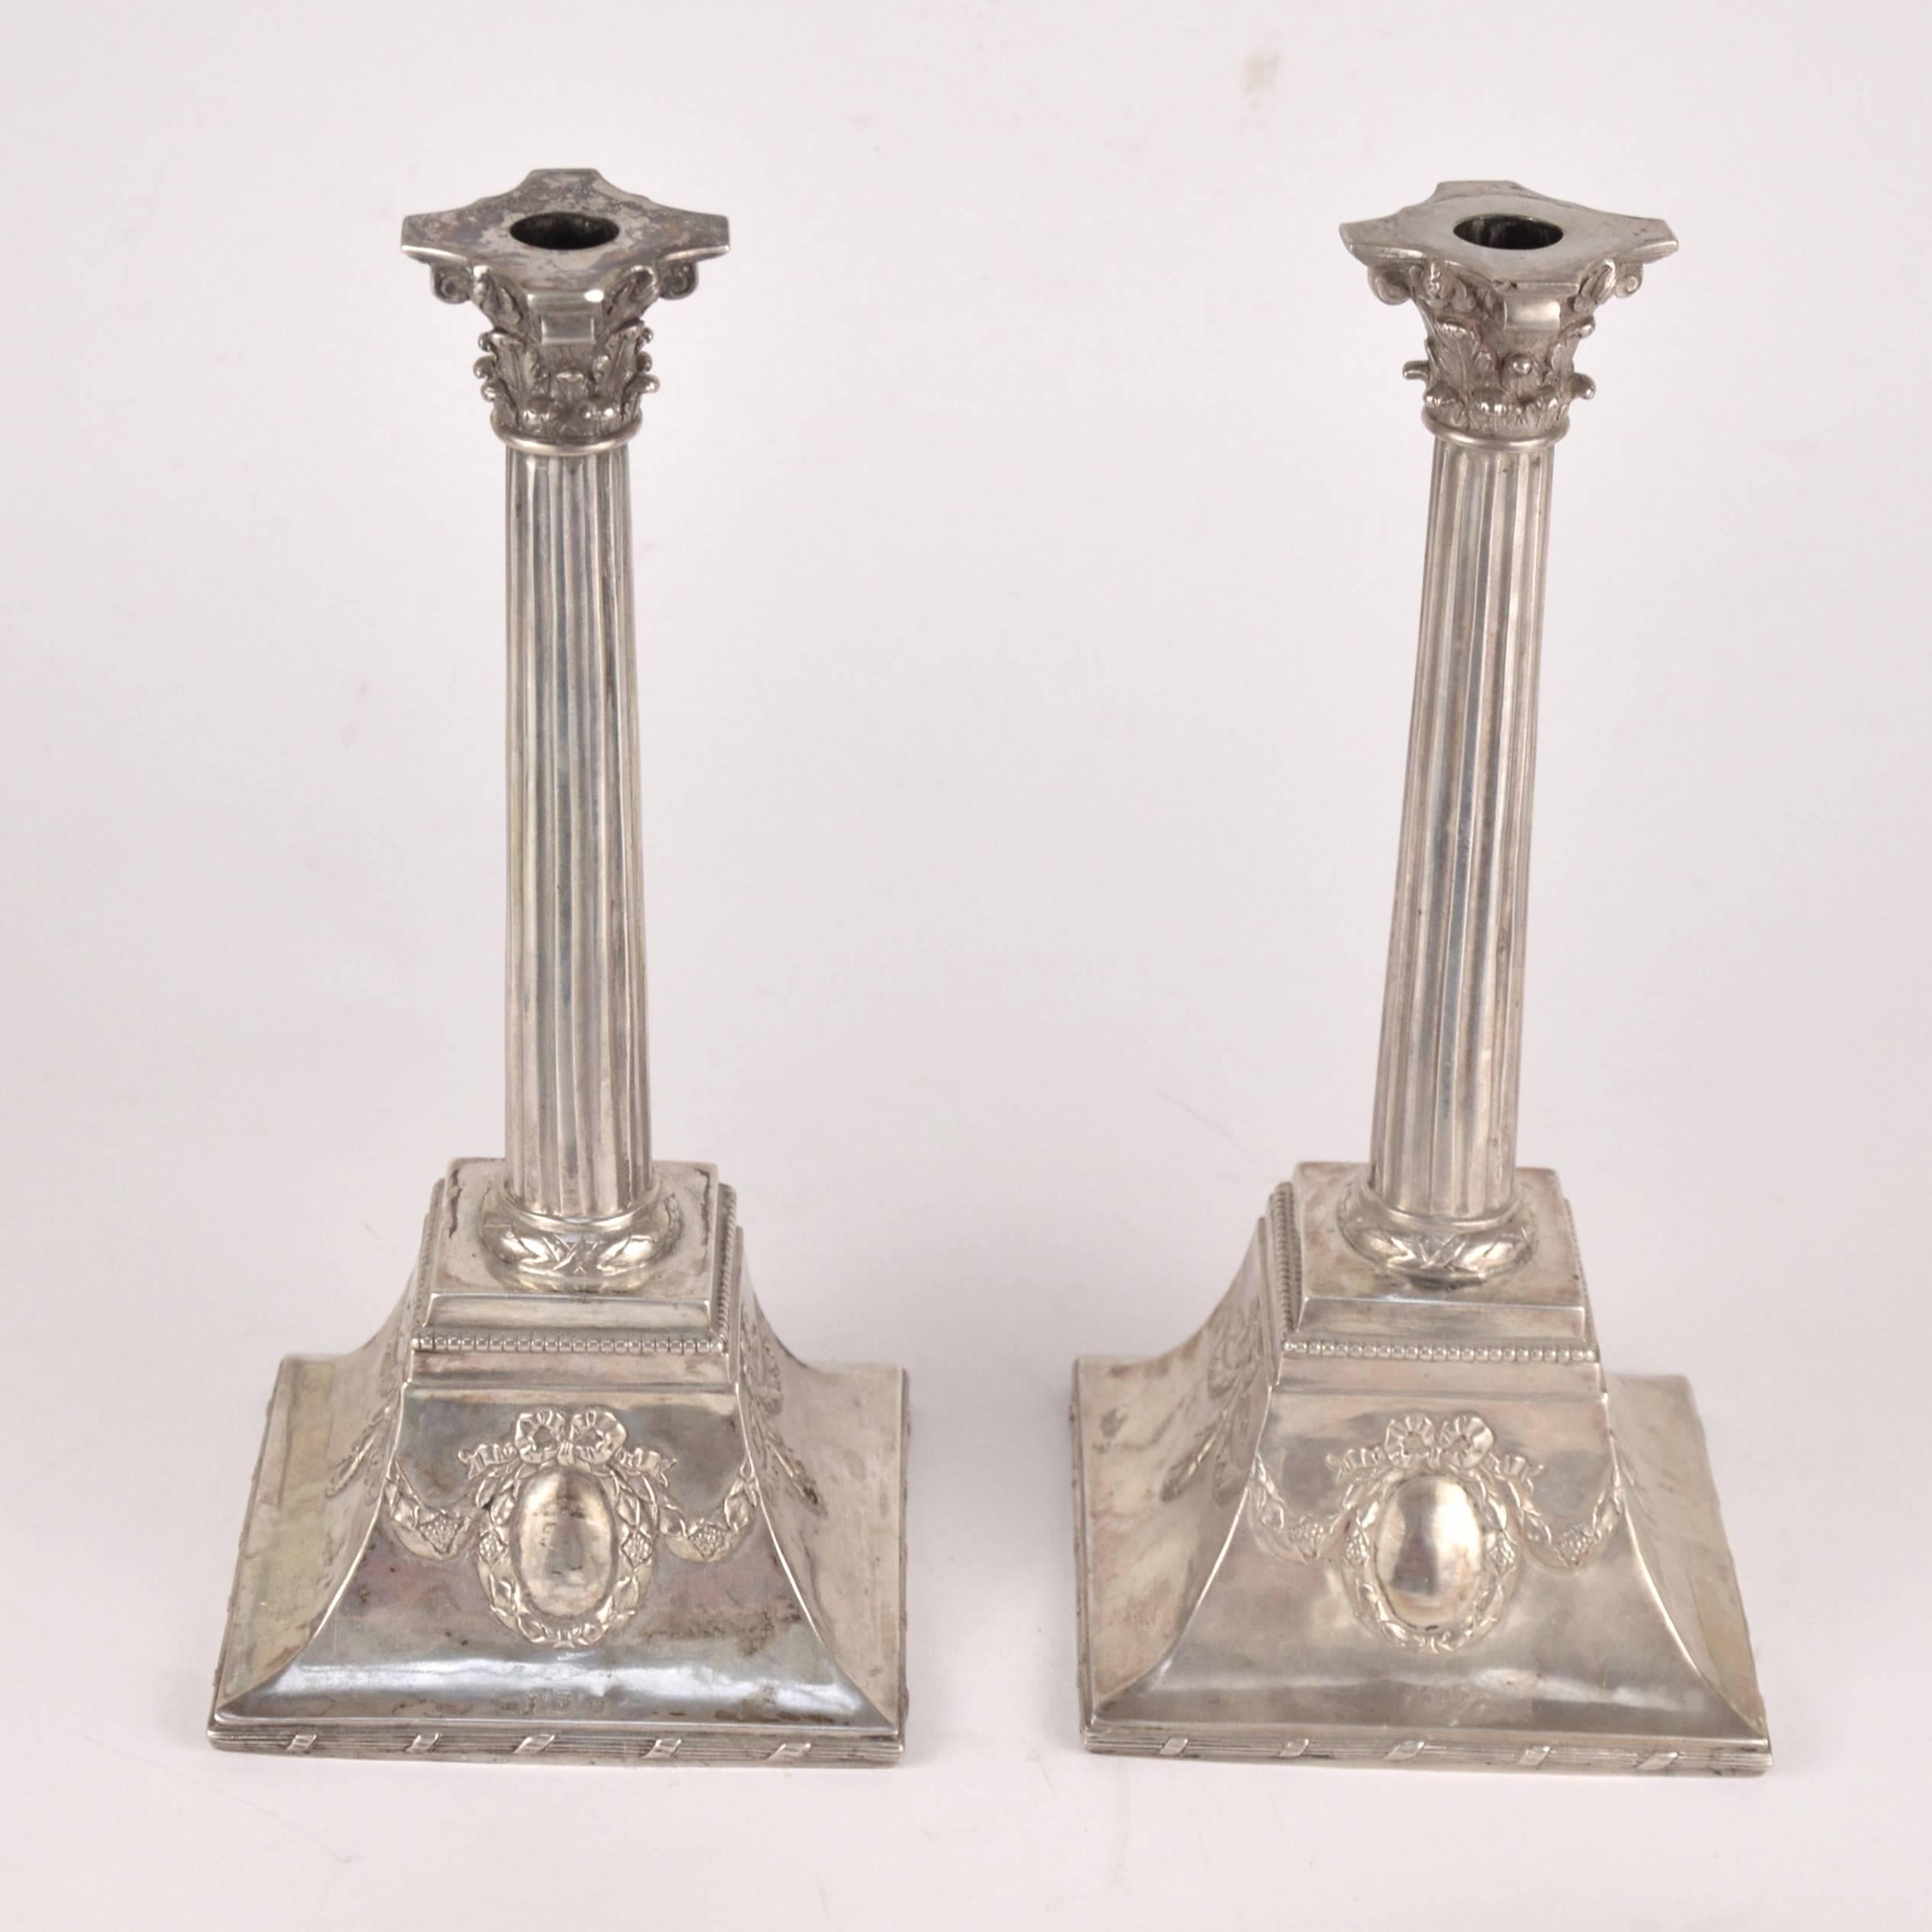 Pair of English silver candlesticks 19th century. Hallmark of London.

Measure: Height 29.5 cm.

Minor wear, patina.